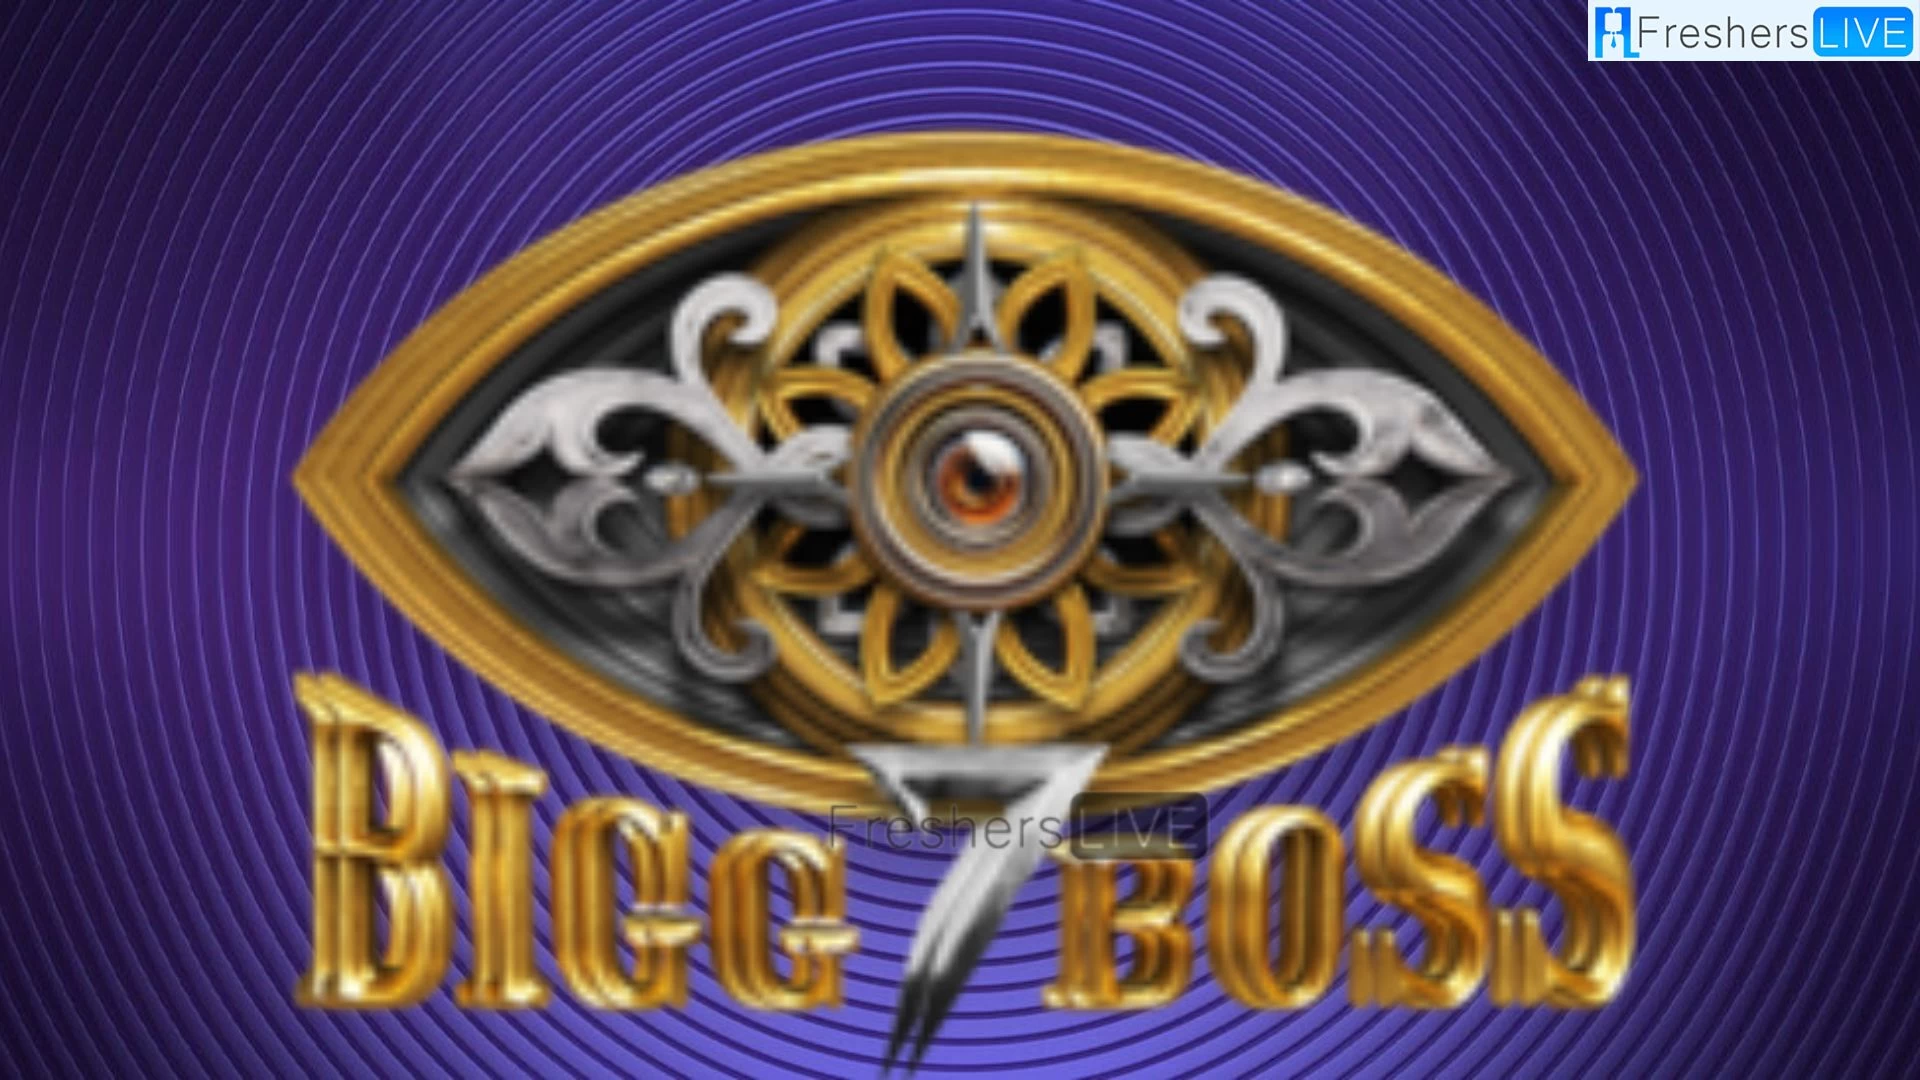 Bigg Boss Tamil Season 7, Where To Watch Bigg Boss Tamil Season 7?